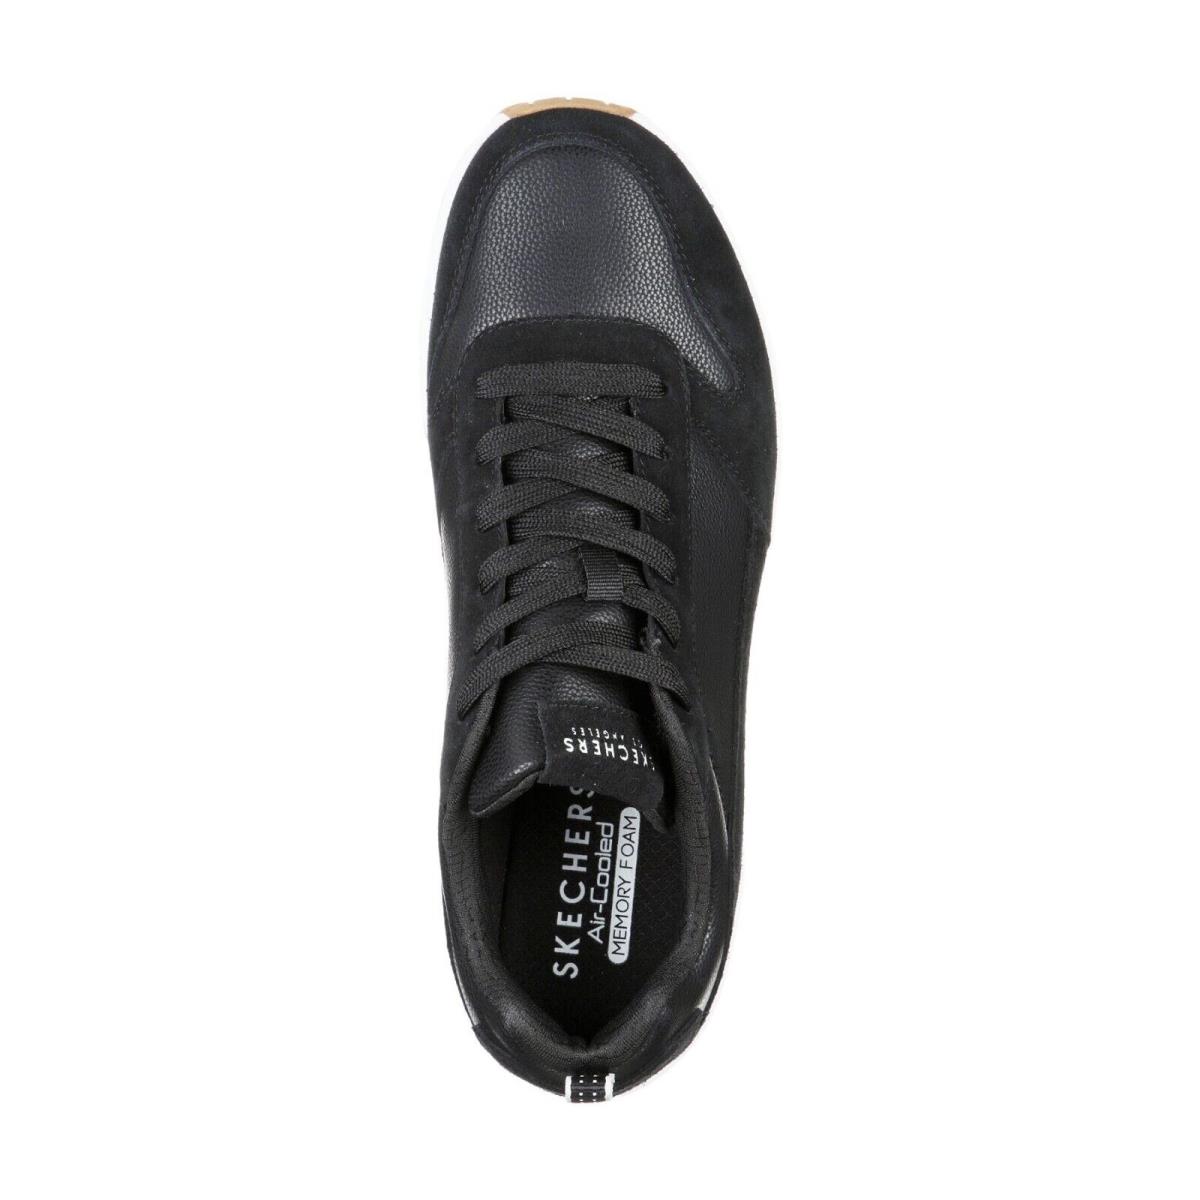 Skechers shoes Uno Stacre - Black/White 10